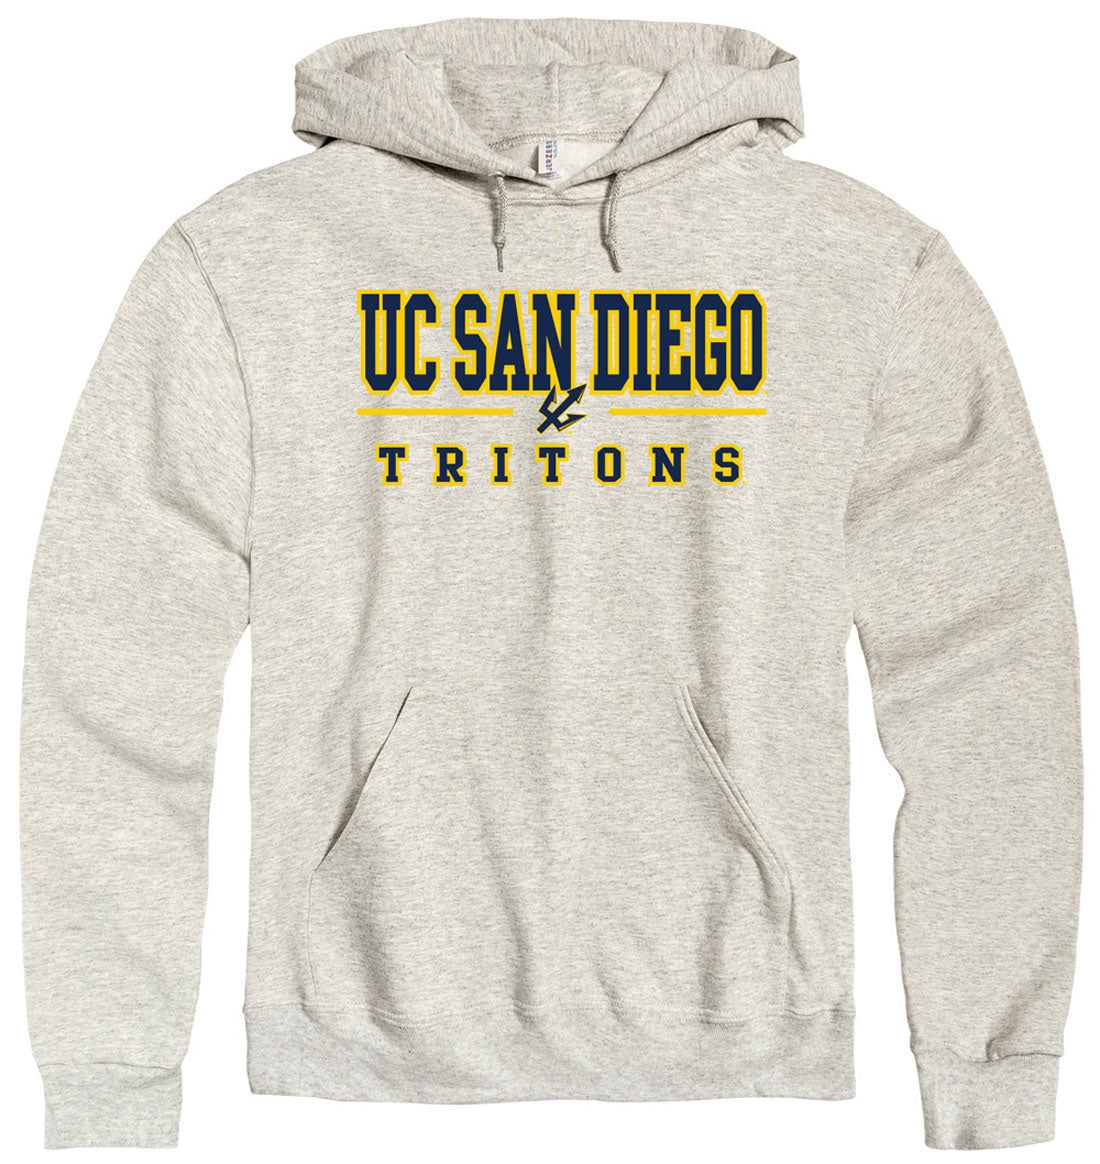 University of California San Diego UCSD Tritons hoodie sweatshirt-Oatmeal-Shop College Wear